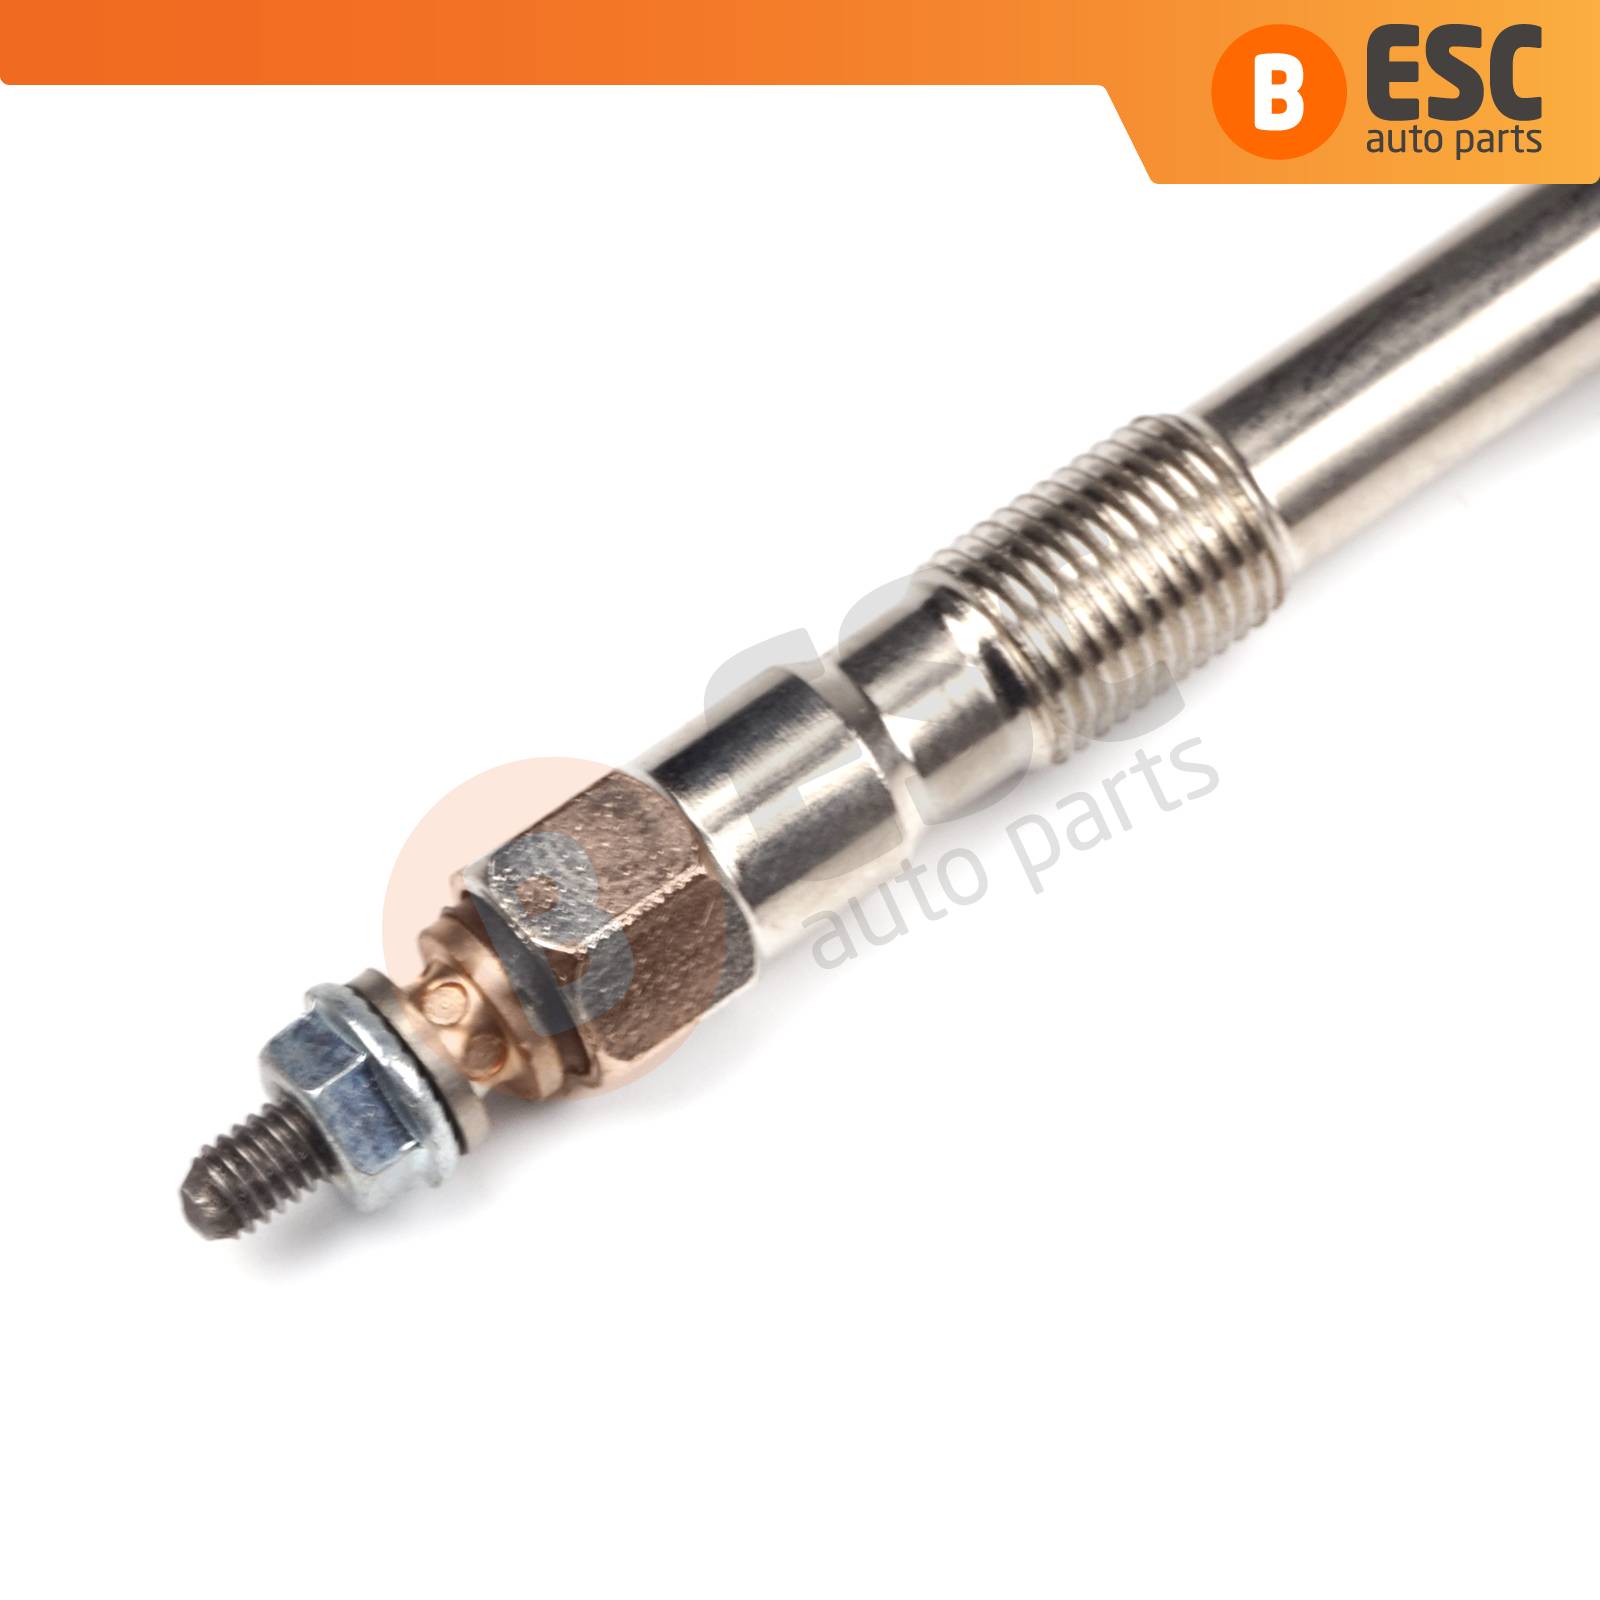 ESC Auto Parts - EGP46 1 Piece Heater Glow Plugs GX120 100226246 for  Citroen Peugeot 2.5 TDI